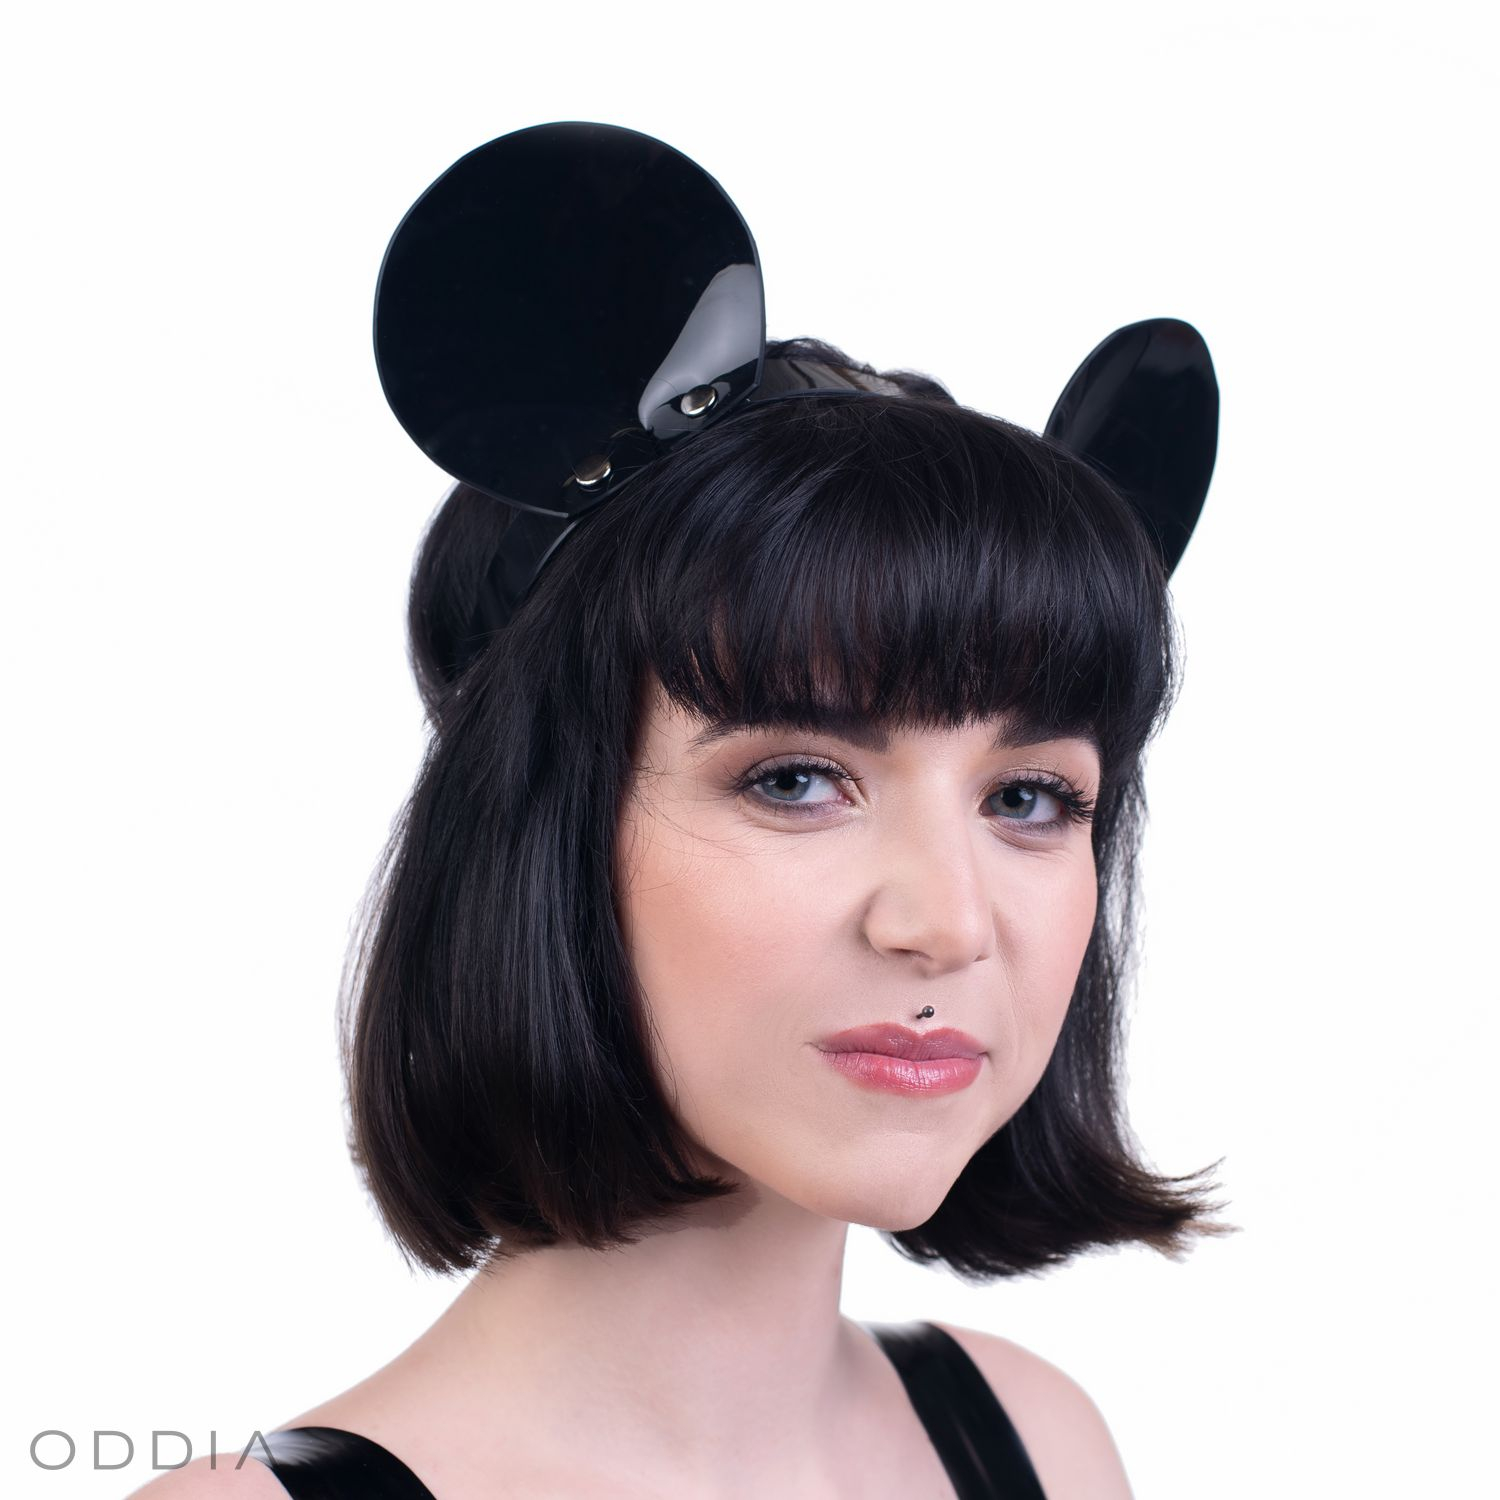 https://weareoddia.com/735-large_default/headband-with-mouse-ears.jpg